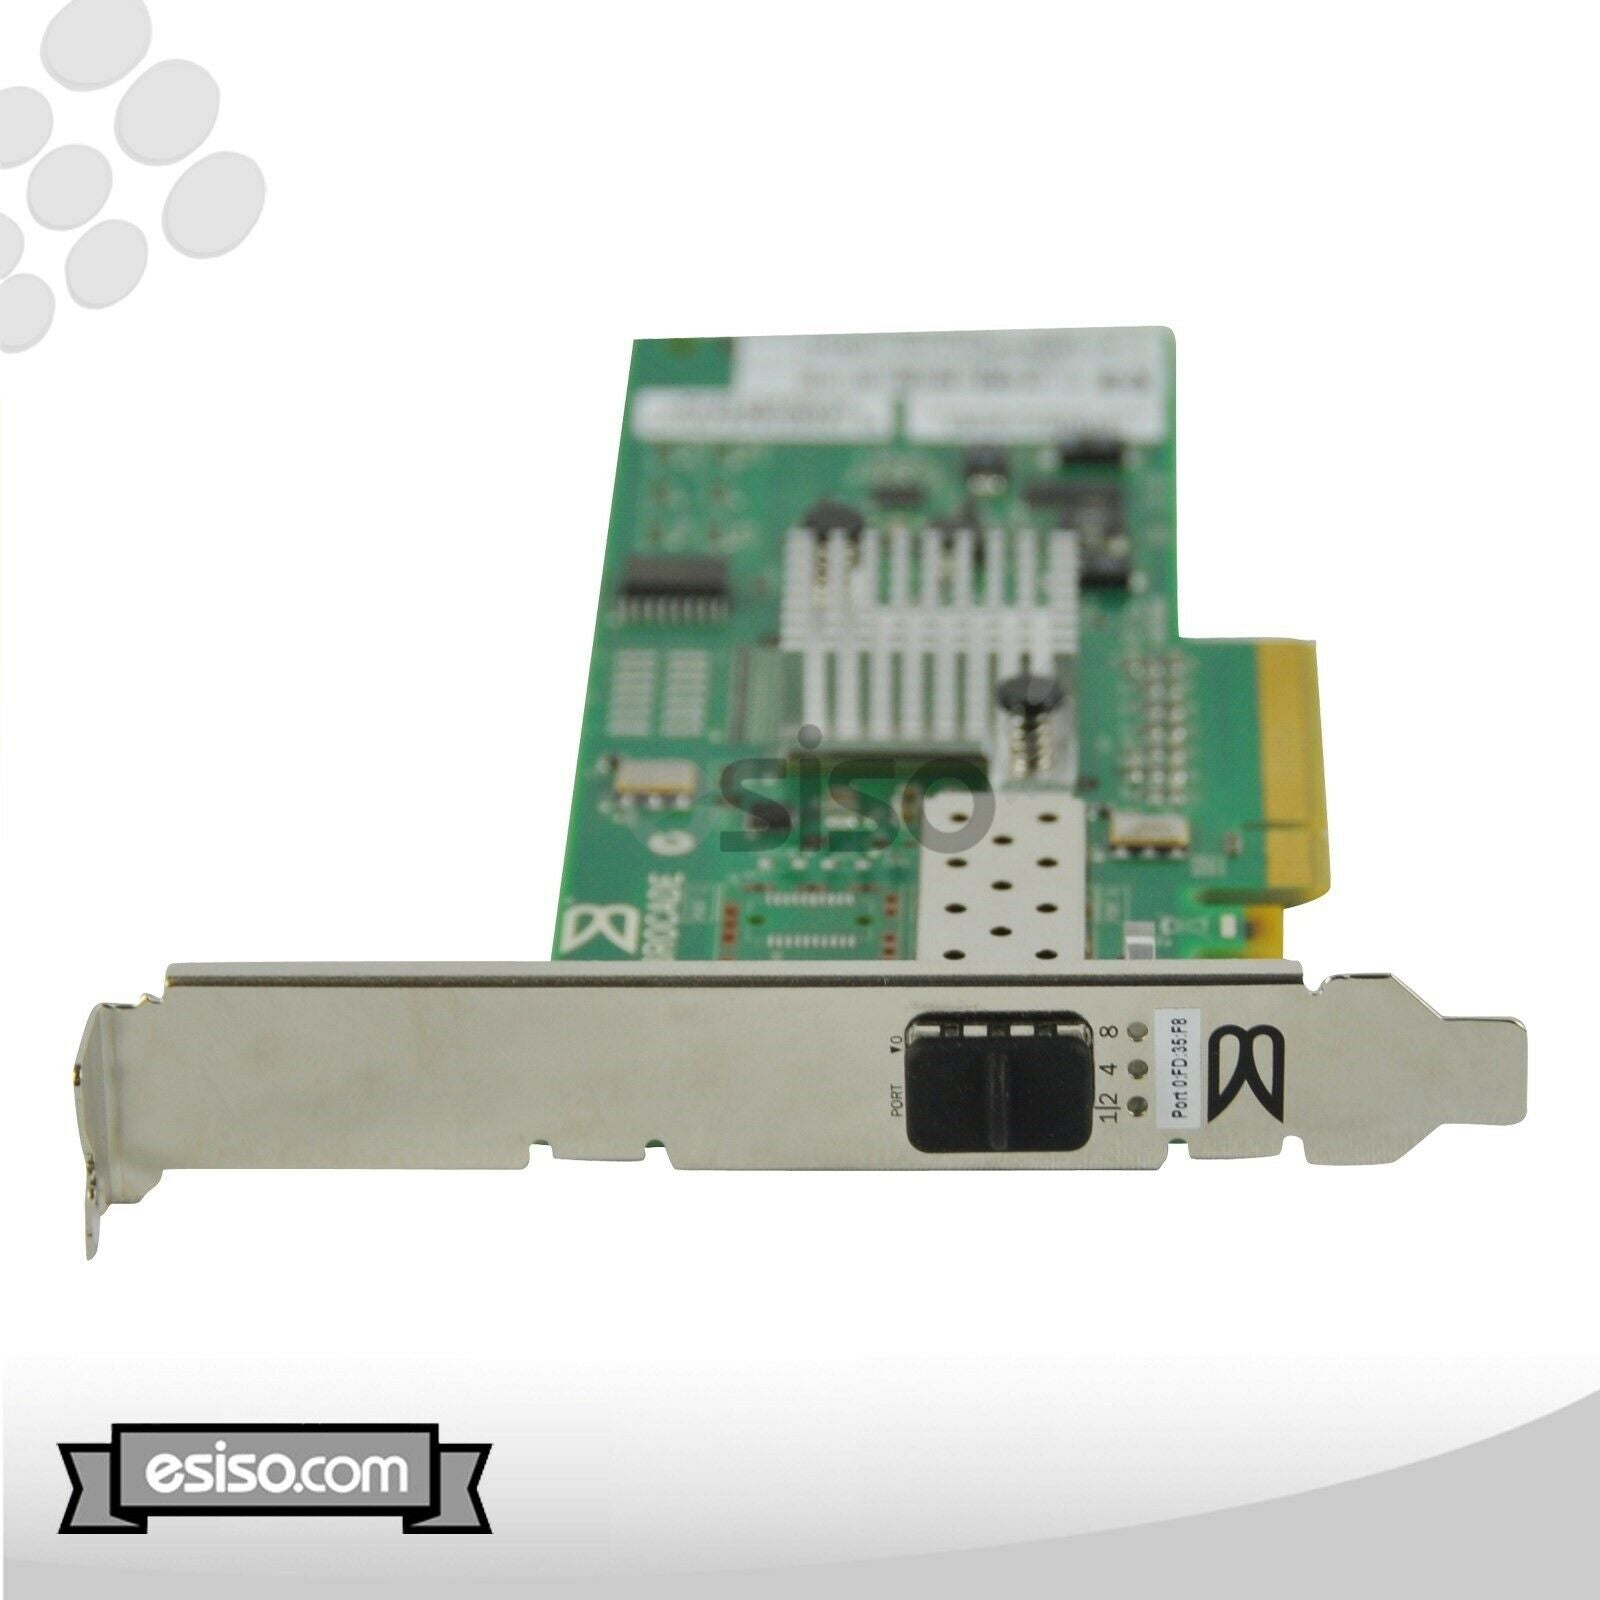 571520-002 AP769B AP769-60002 HPE 81B PCIE 8GB FC SINGLE PORT HOST BUS ADAPTER